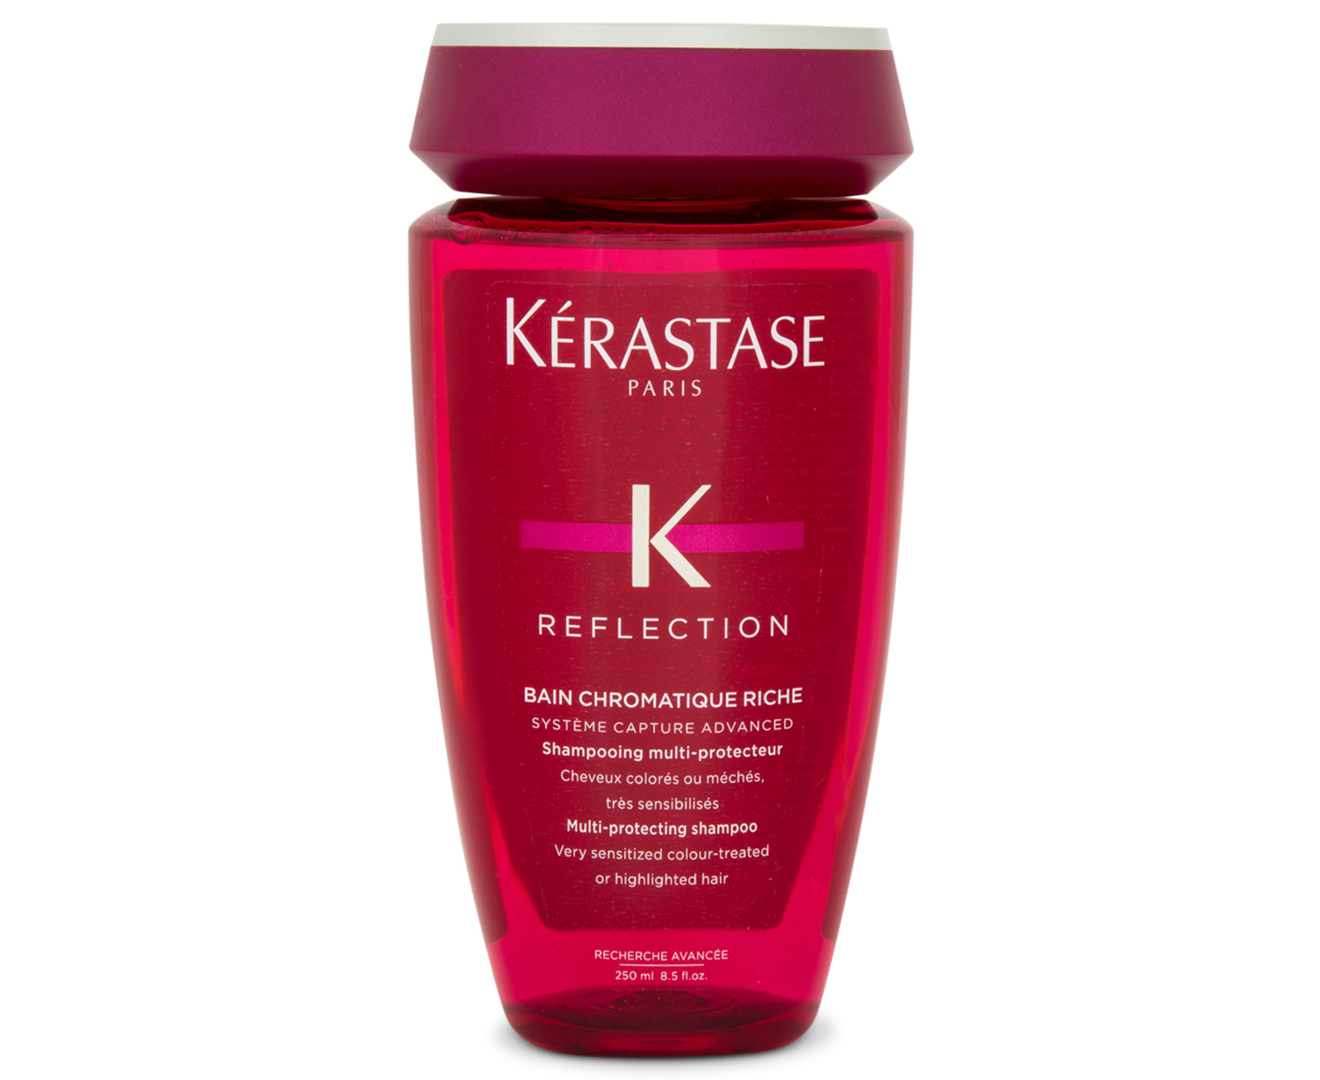 8. "Kerastase Reflection Bain Chromatique Riche Shampoo" - wide 1